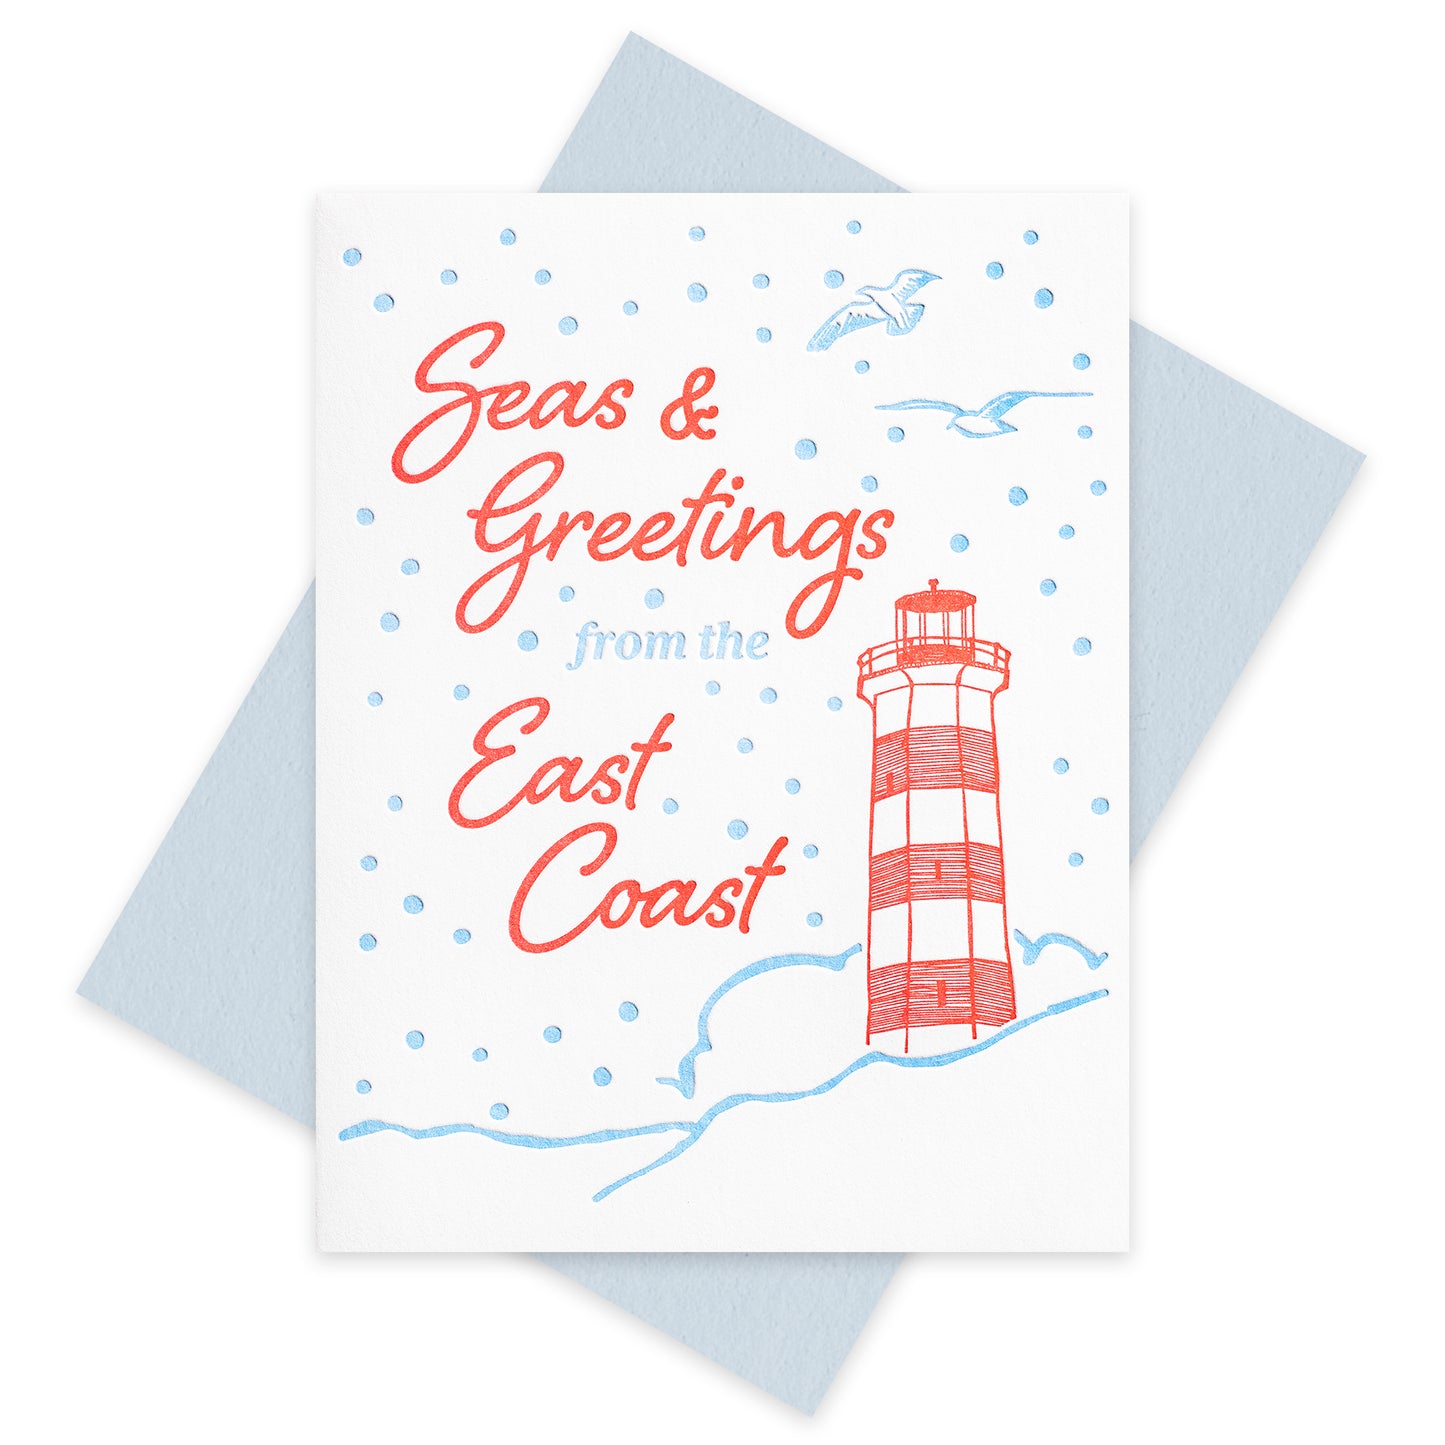 Seas & Greetings Letterpress Card